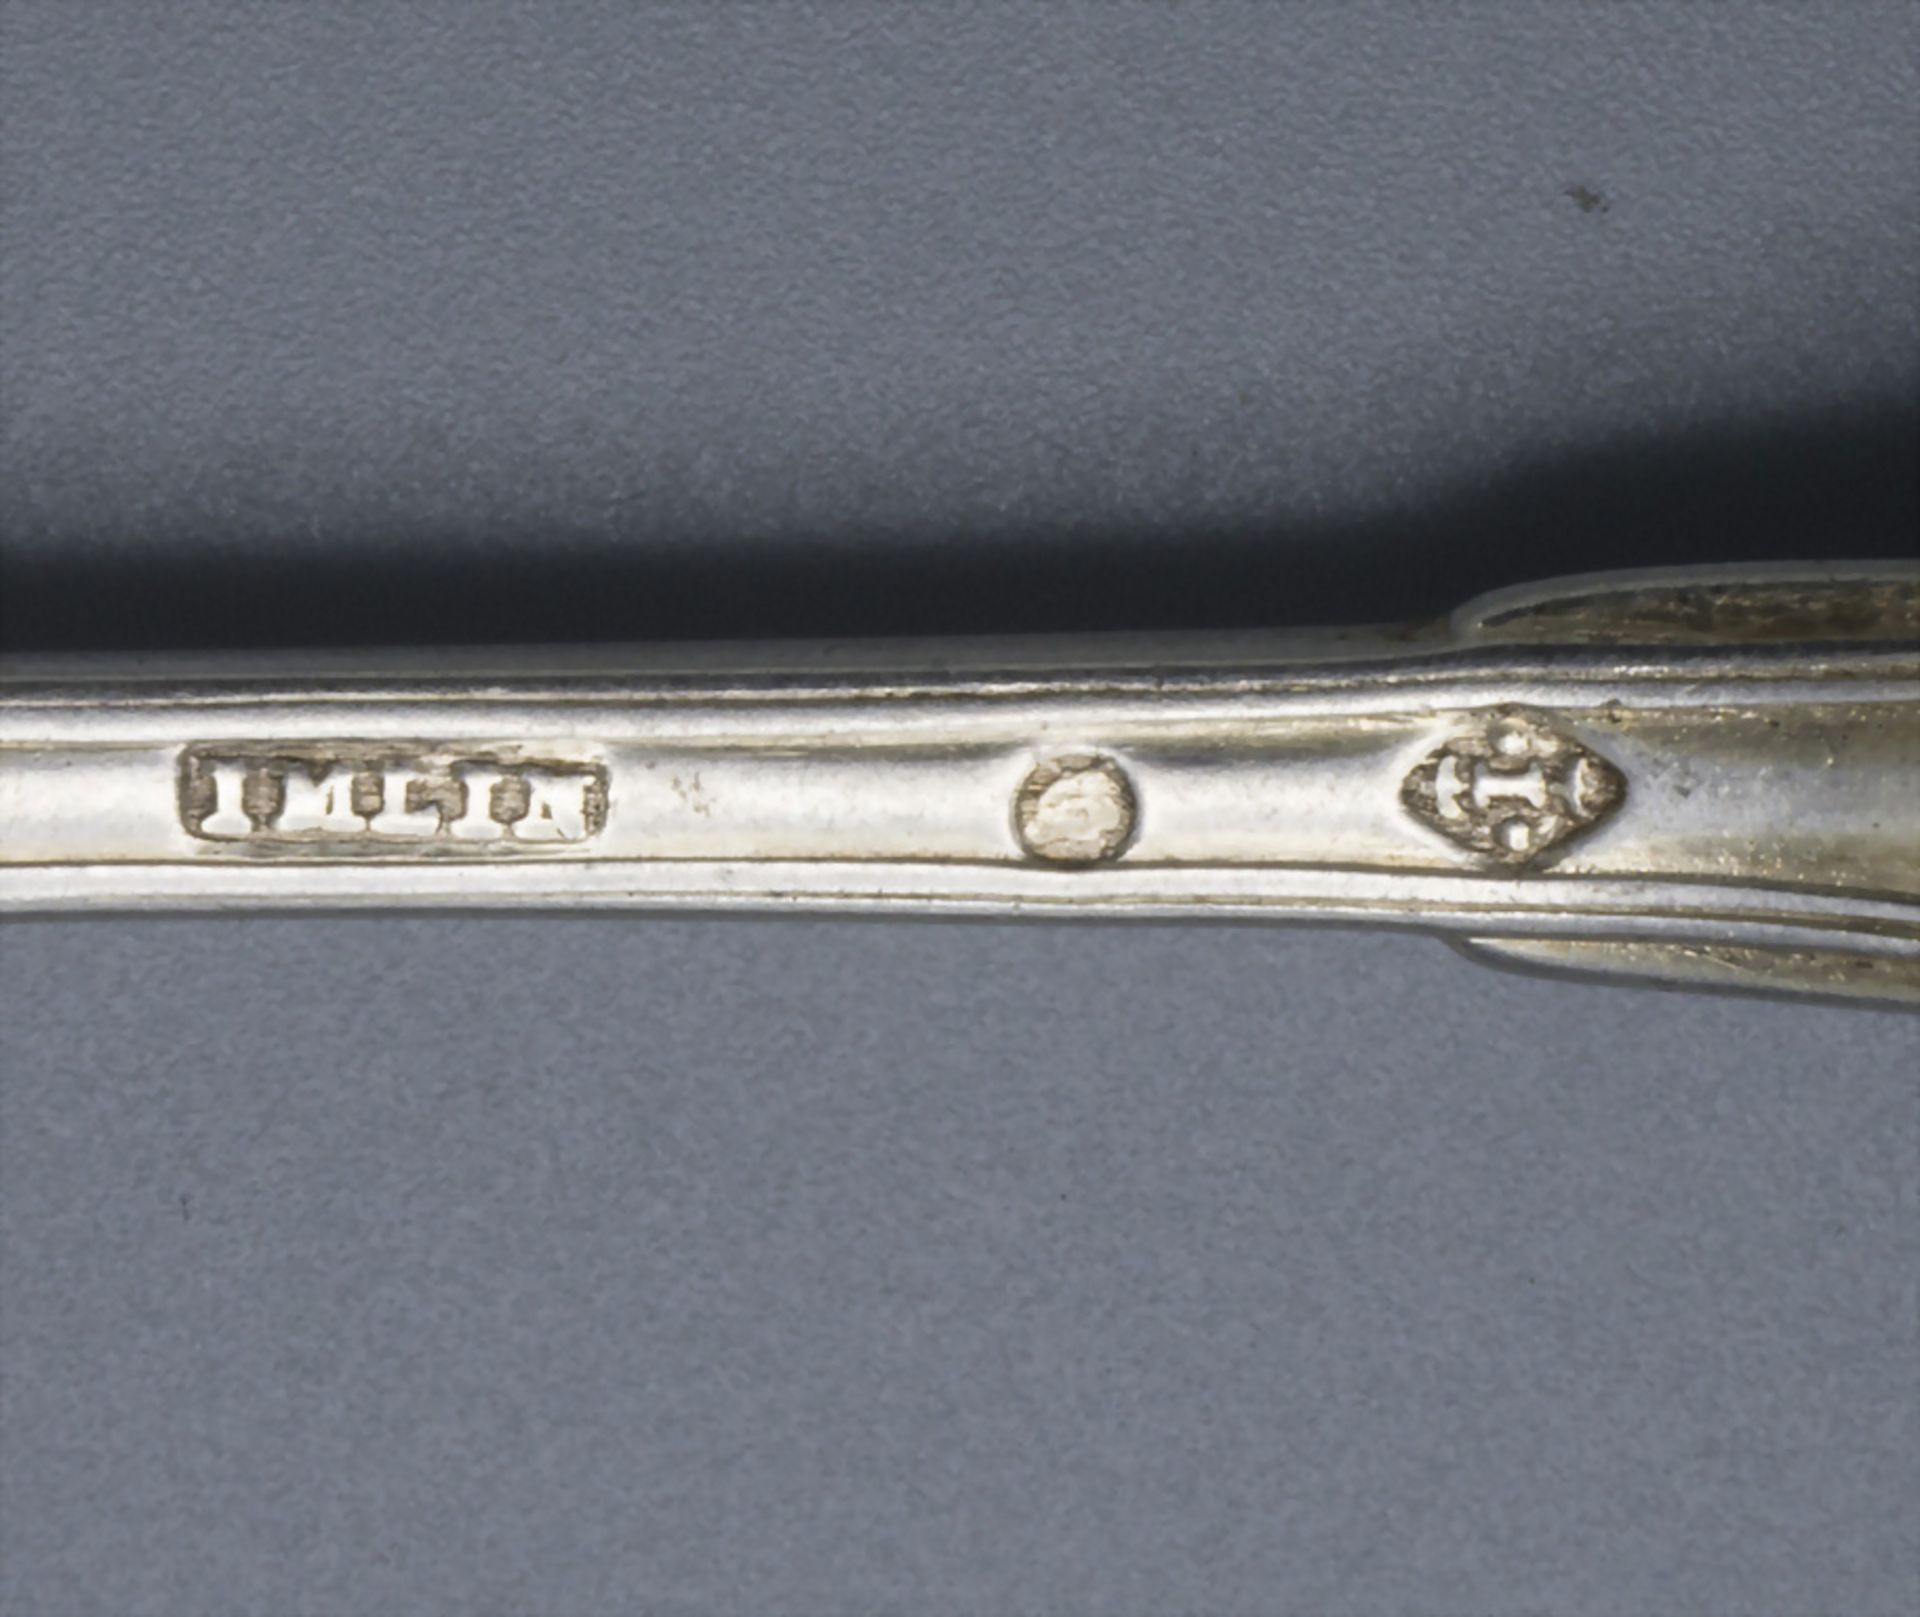 6 Löffel / 6 cuillères en argent massif / 6 silver spoons, Francois Daniel Imlin, Straßburg / ... - Image 6 of 6